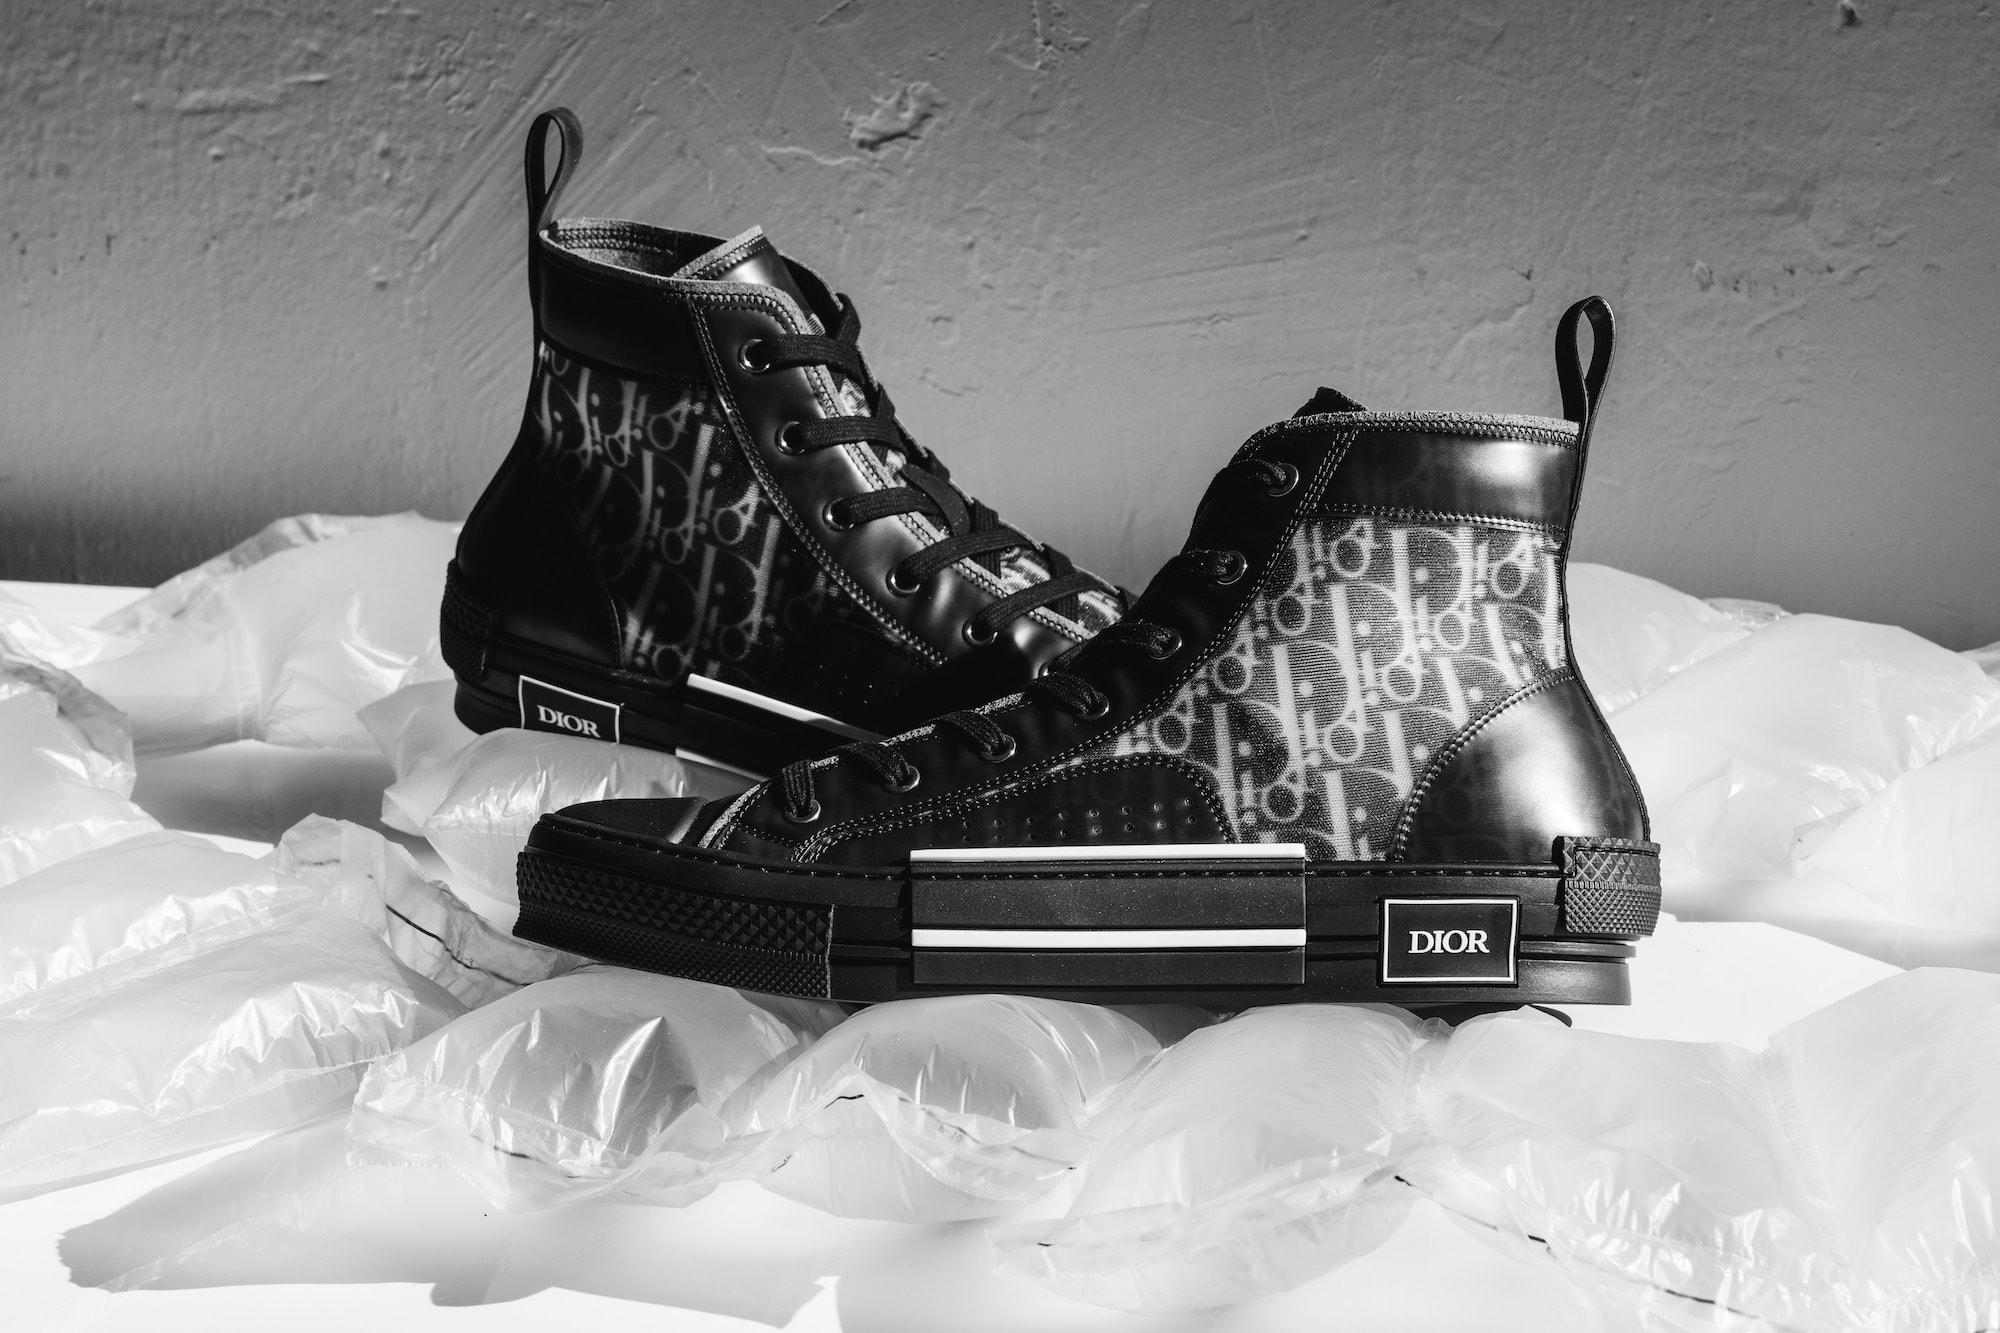 Dior Kim Jones Monogram Sneakers in Black Drop Pattern Grail Where to Buy Release Date 